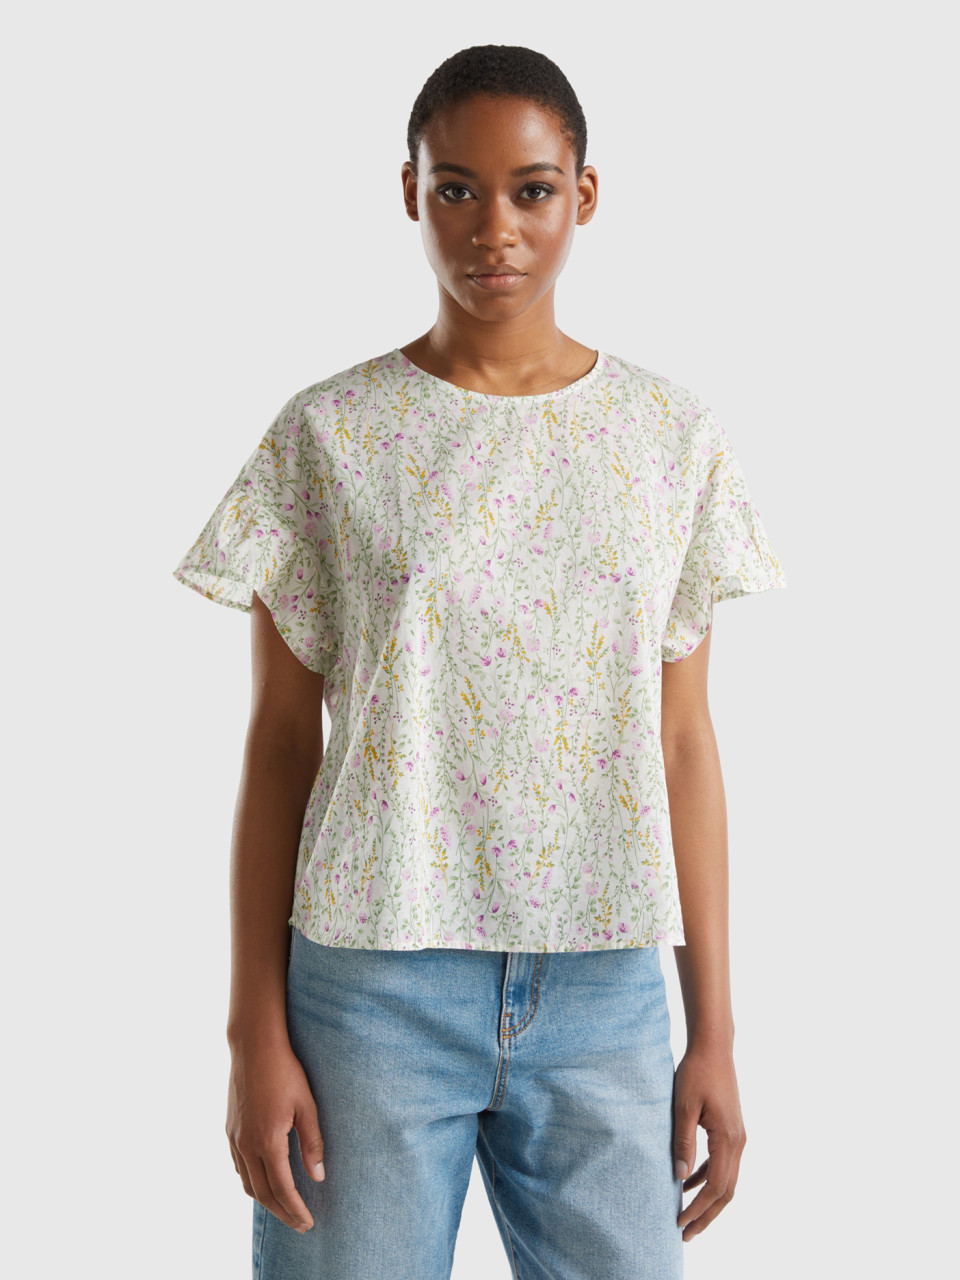 Benetton, Patterned Blouse In Light Cotton, Multi-color, Women